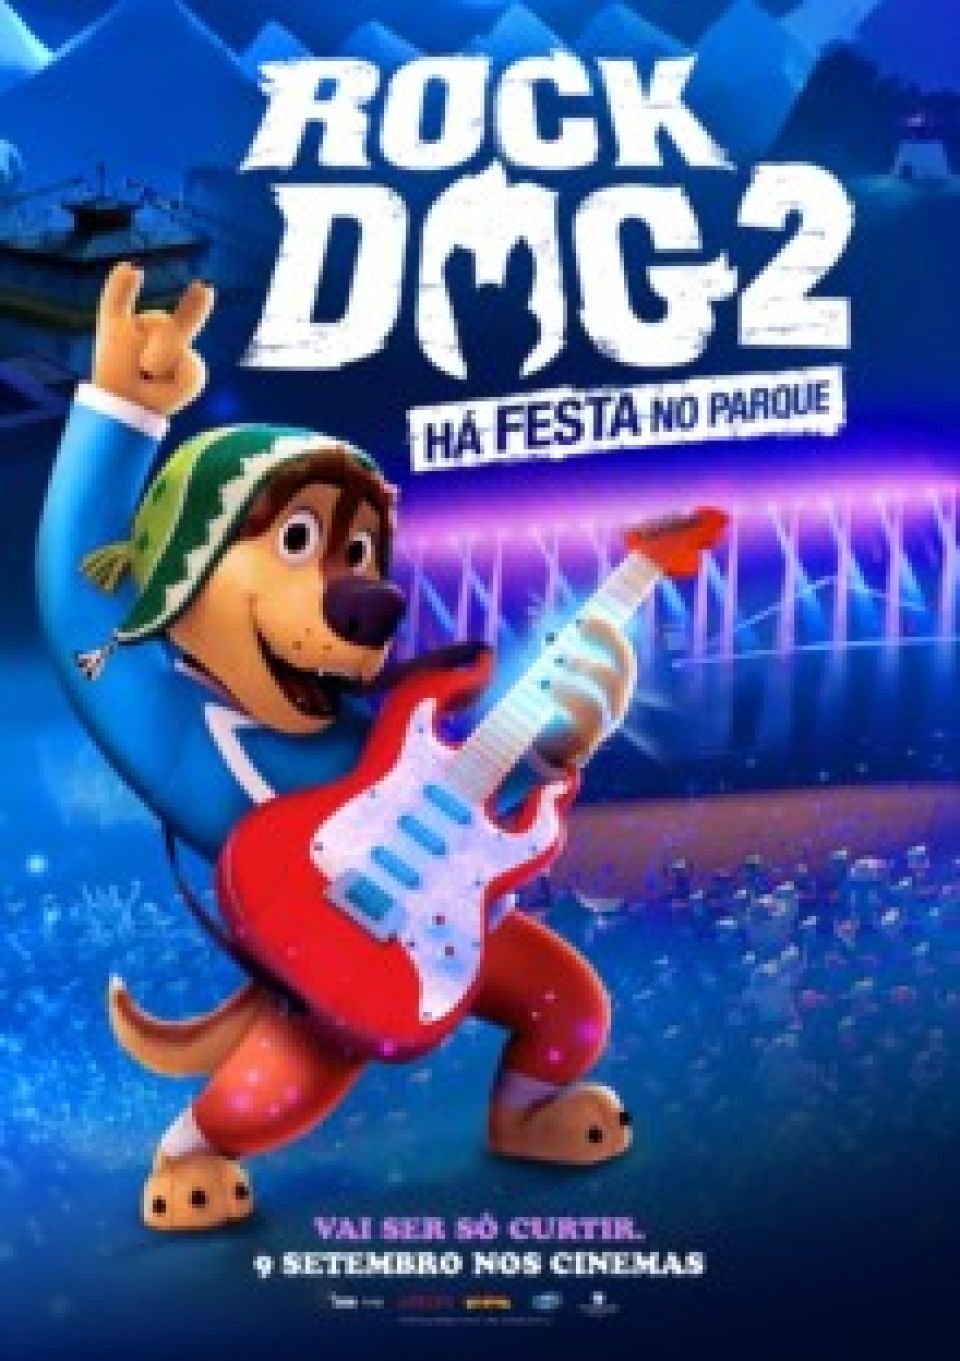 Rock Dog 2 - Há Festa no Parque